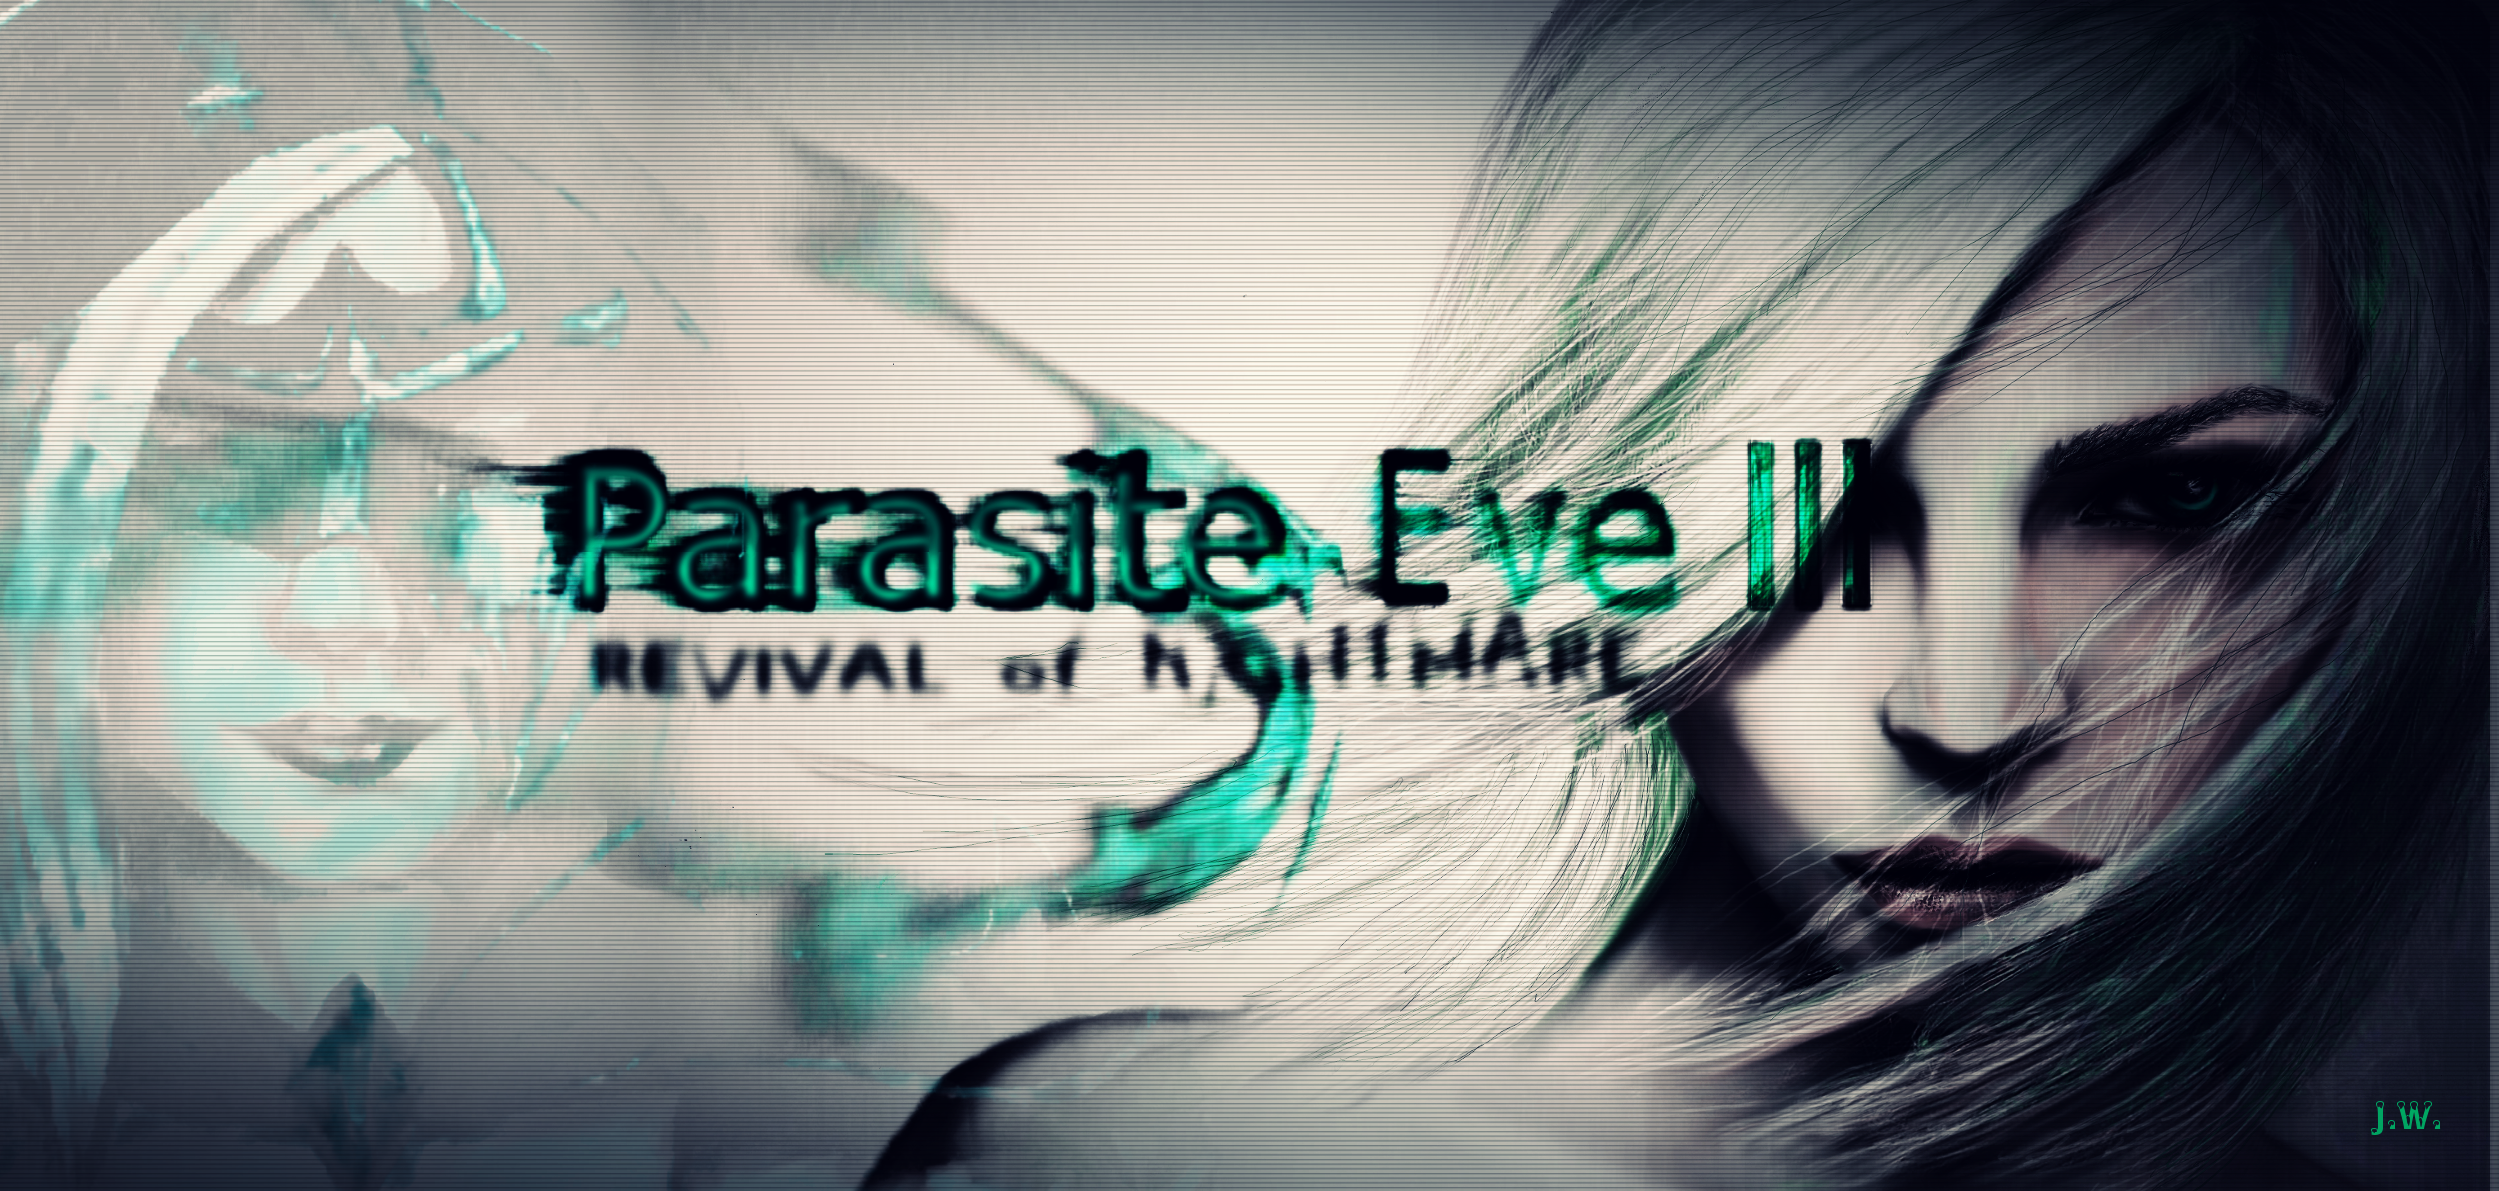 ArtStation - Parasite Eve III Revival of Nightmare